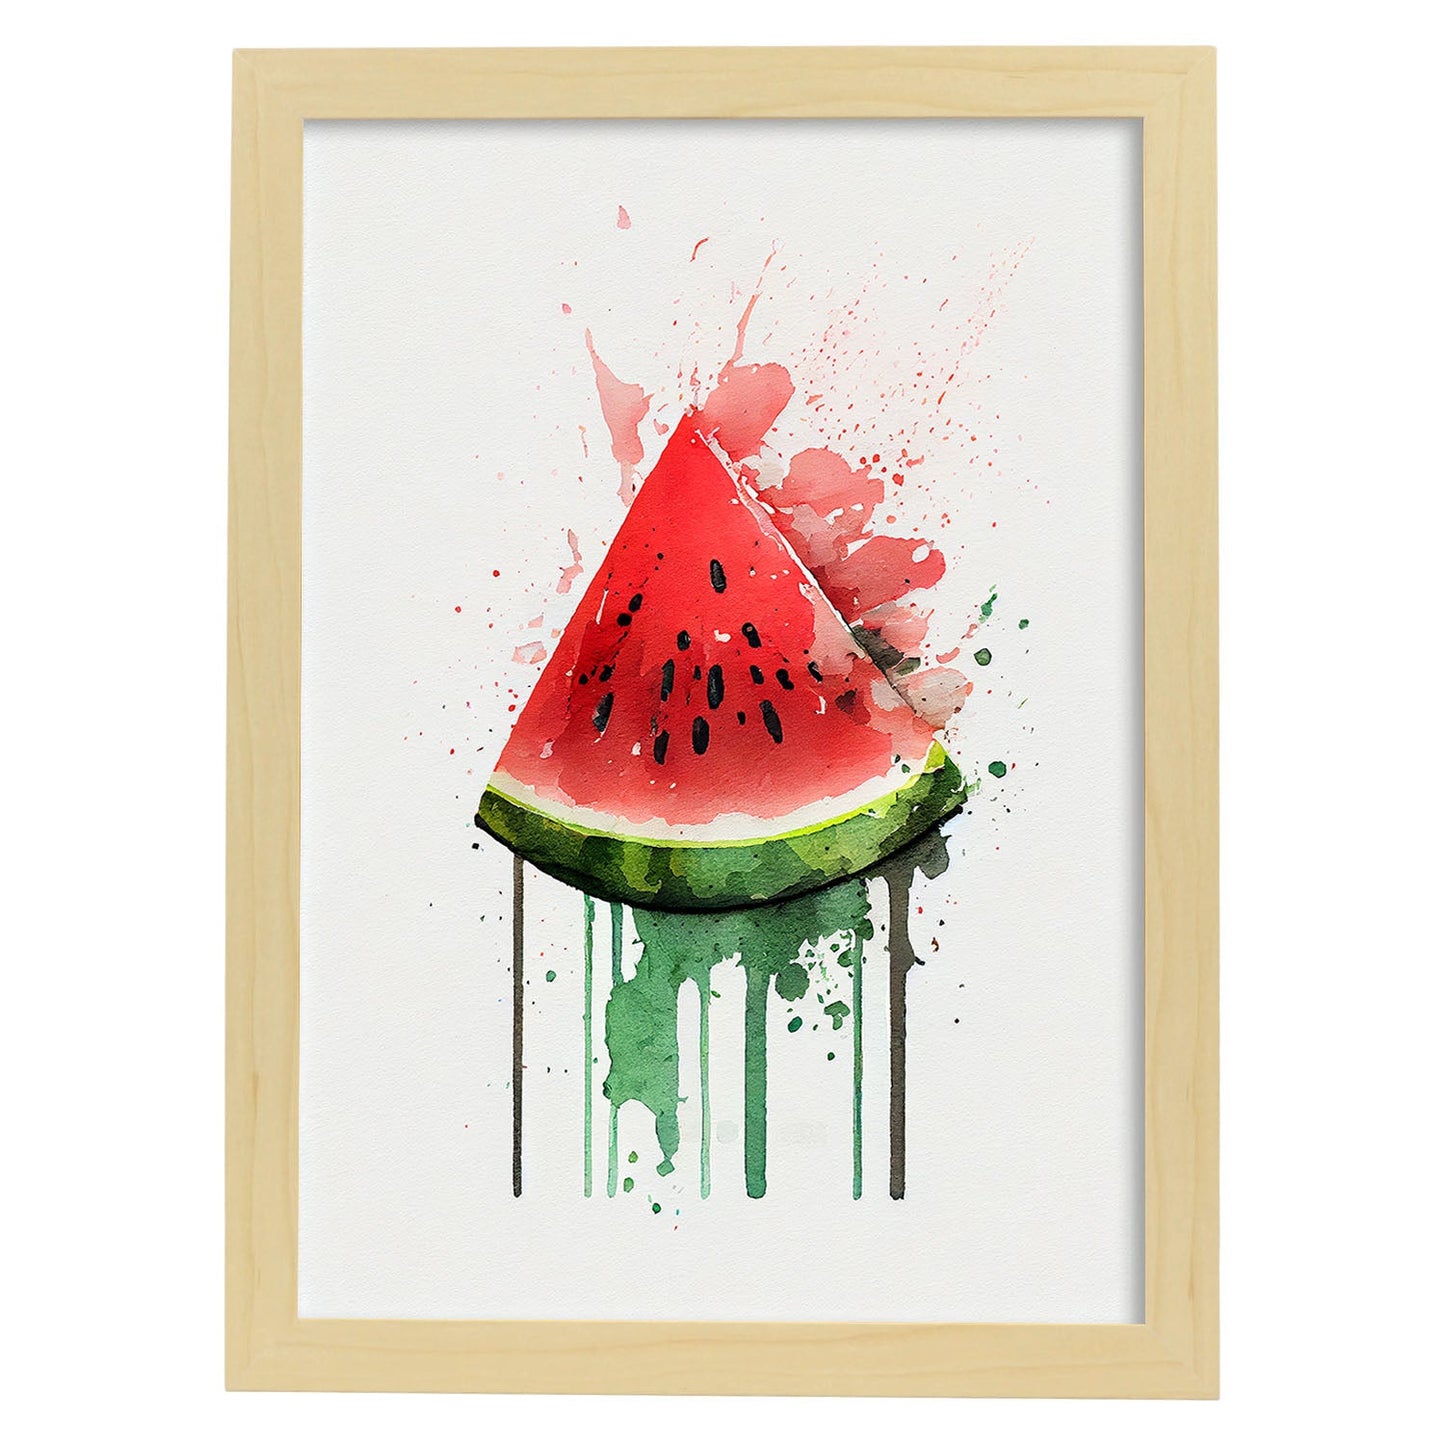 Nacnic minimalist Watermelon_2. Aesthetic Wall Art Prints for Bedroom or Living Room Design.-Artwork-Nacnic-A4-Marco Madera Clara-Nacnic Estudio SL